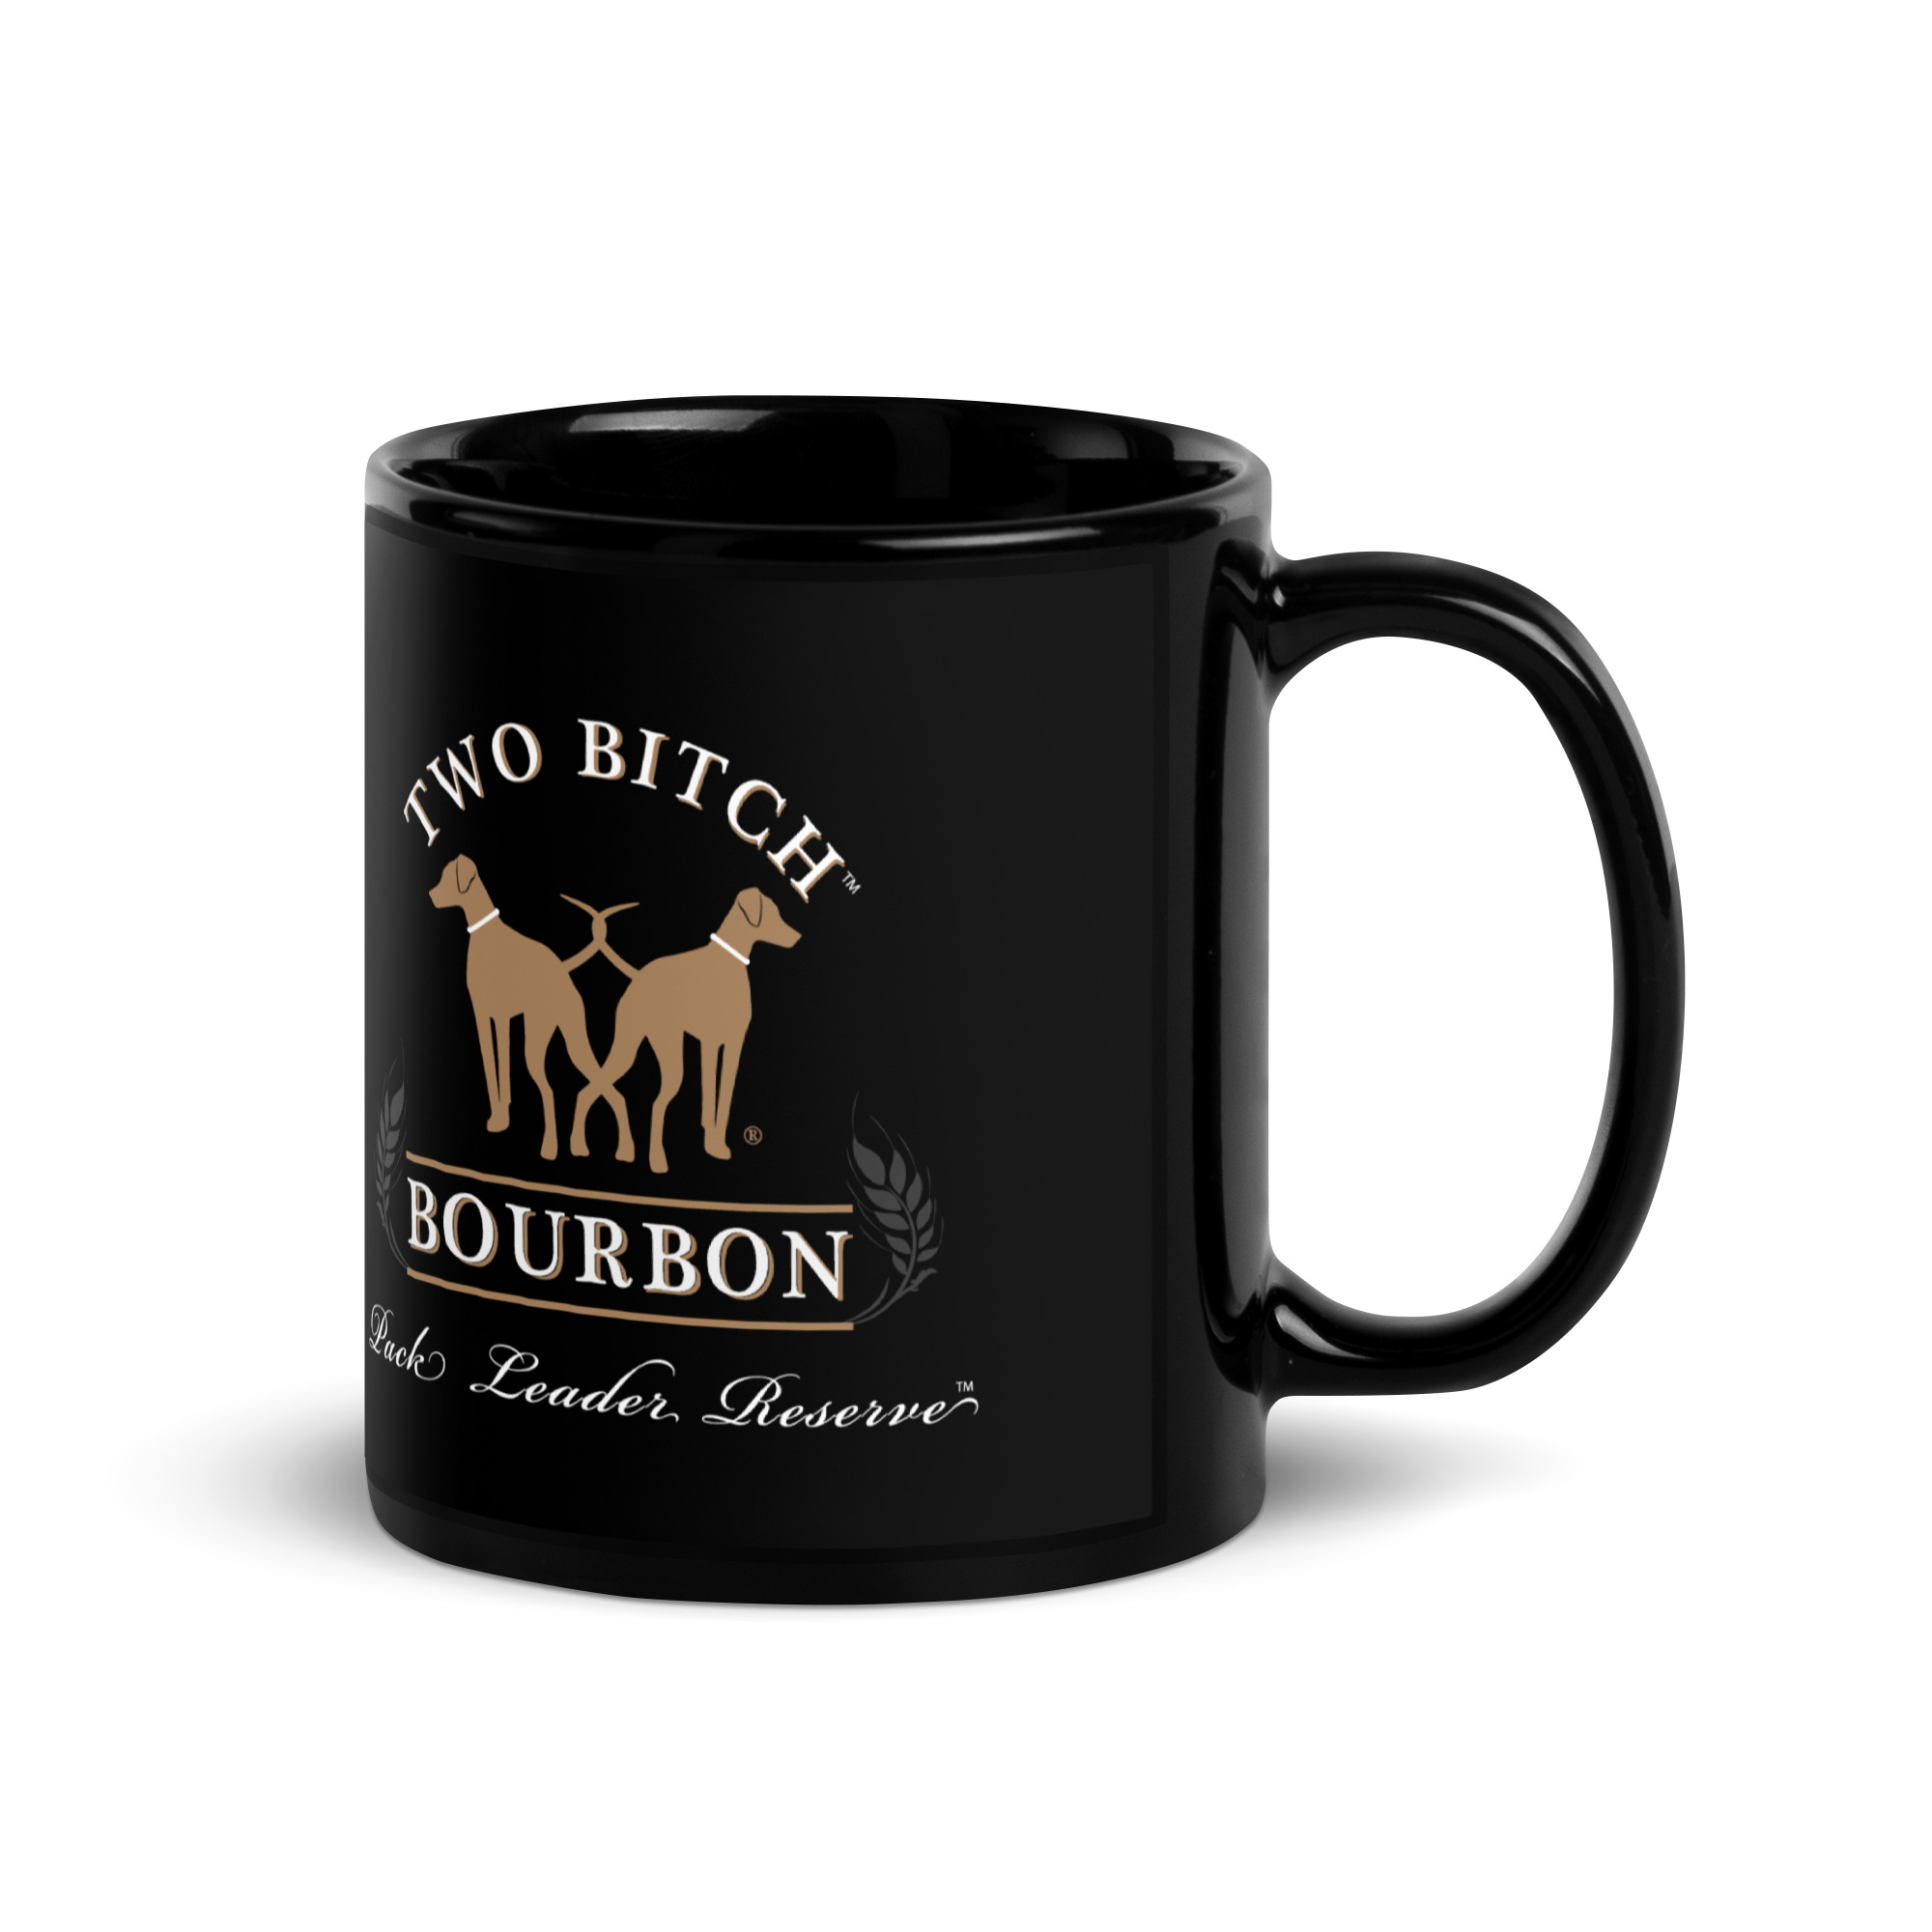 Two Bitch Bourbon Pack Leader Reserve Black Glossy Mug